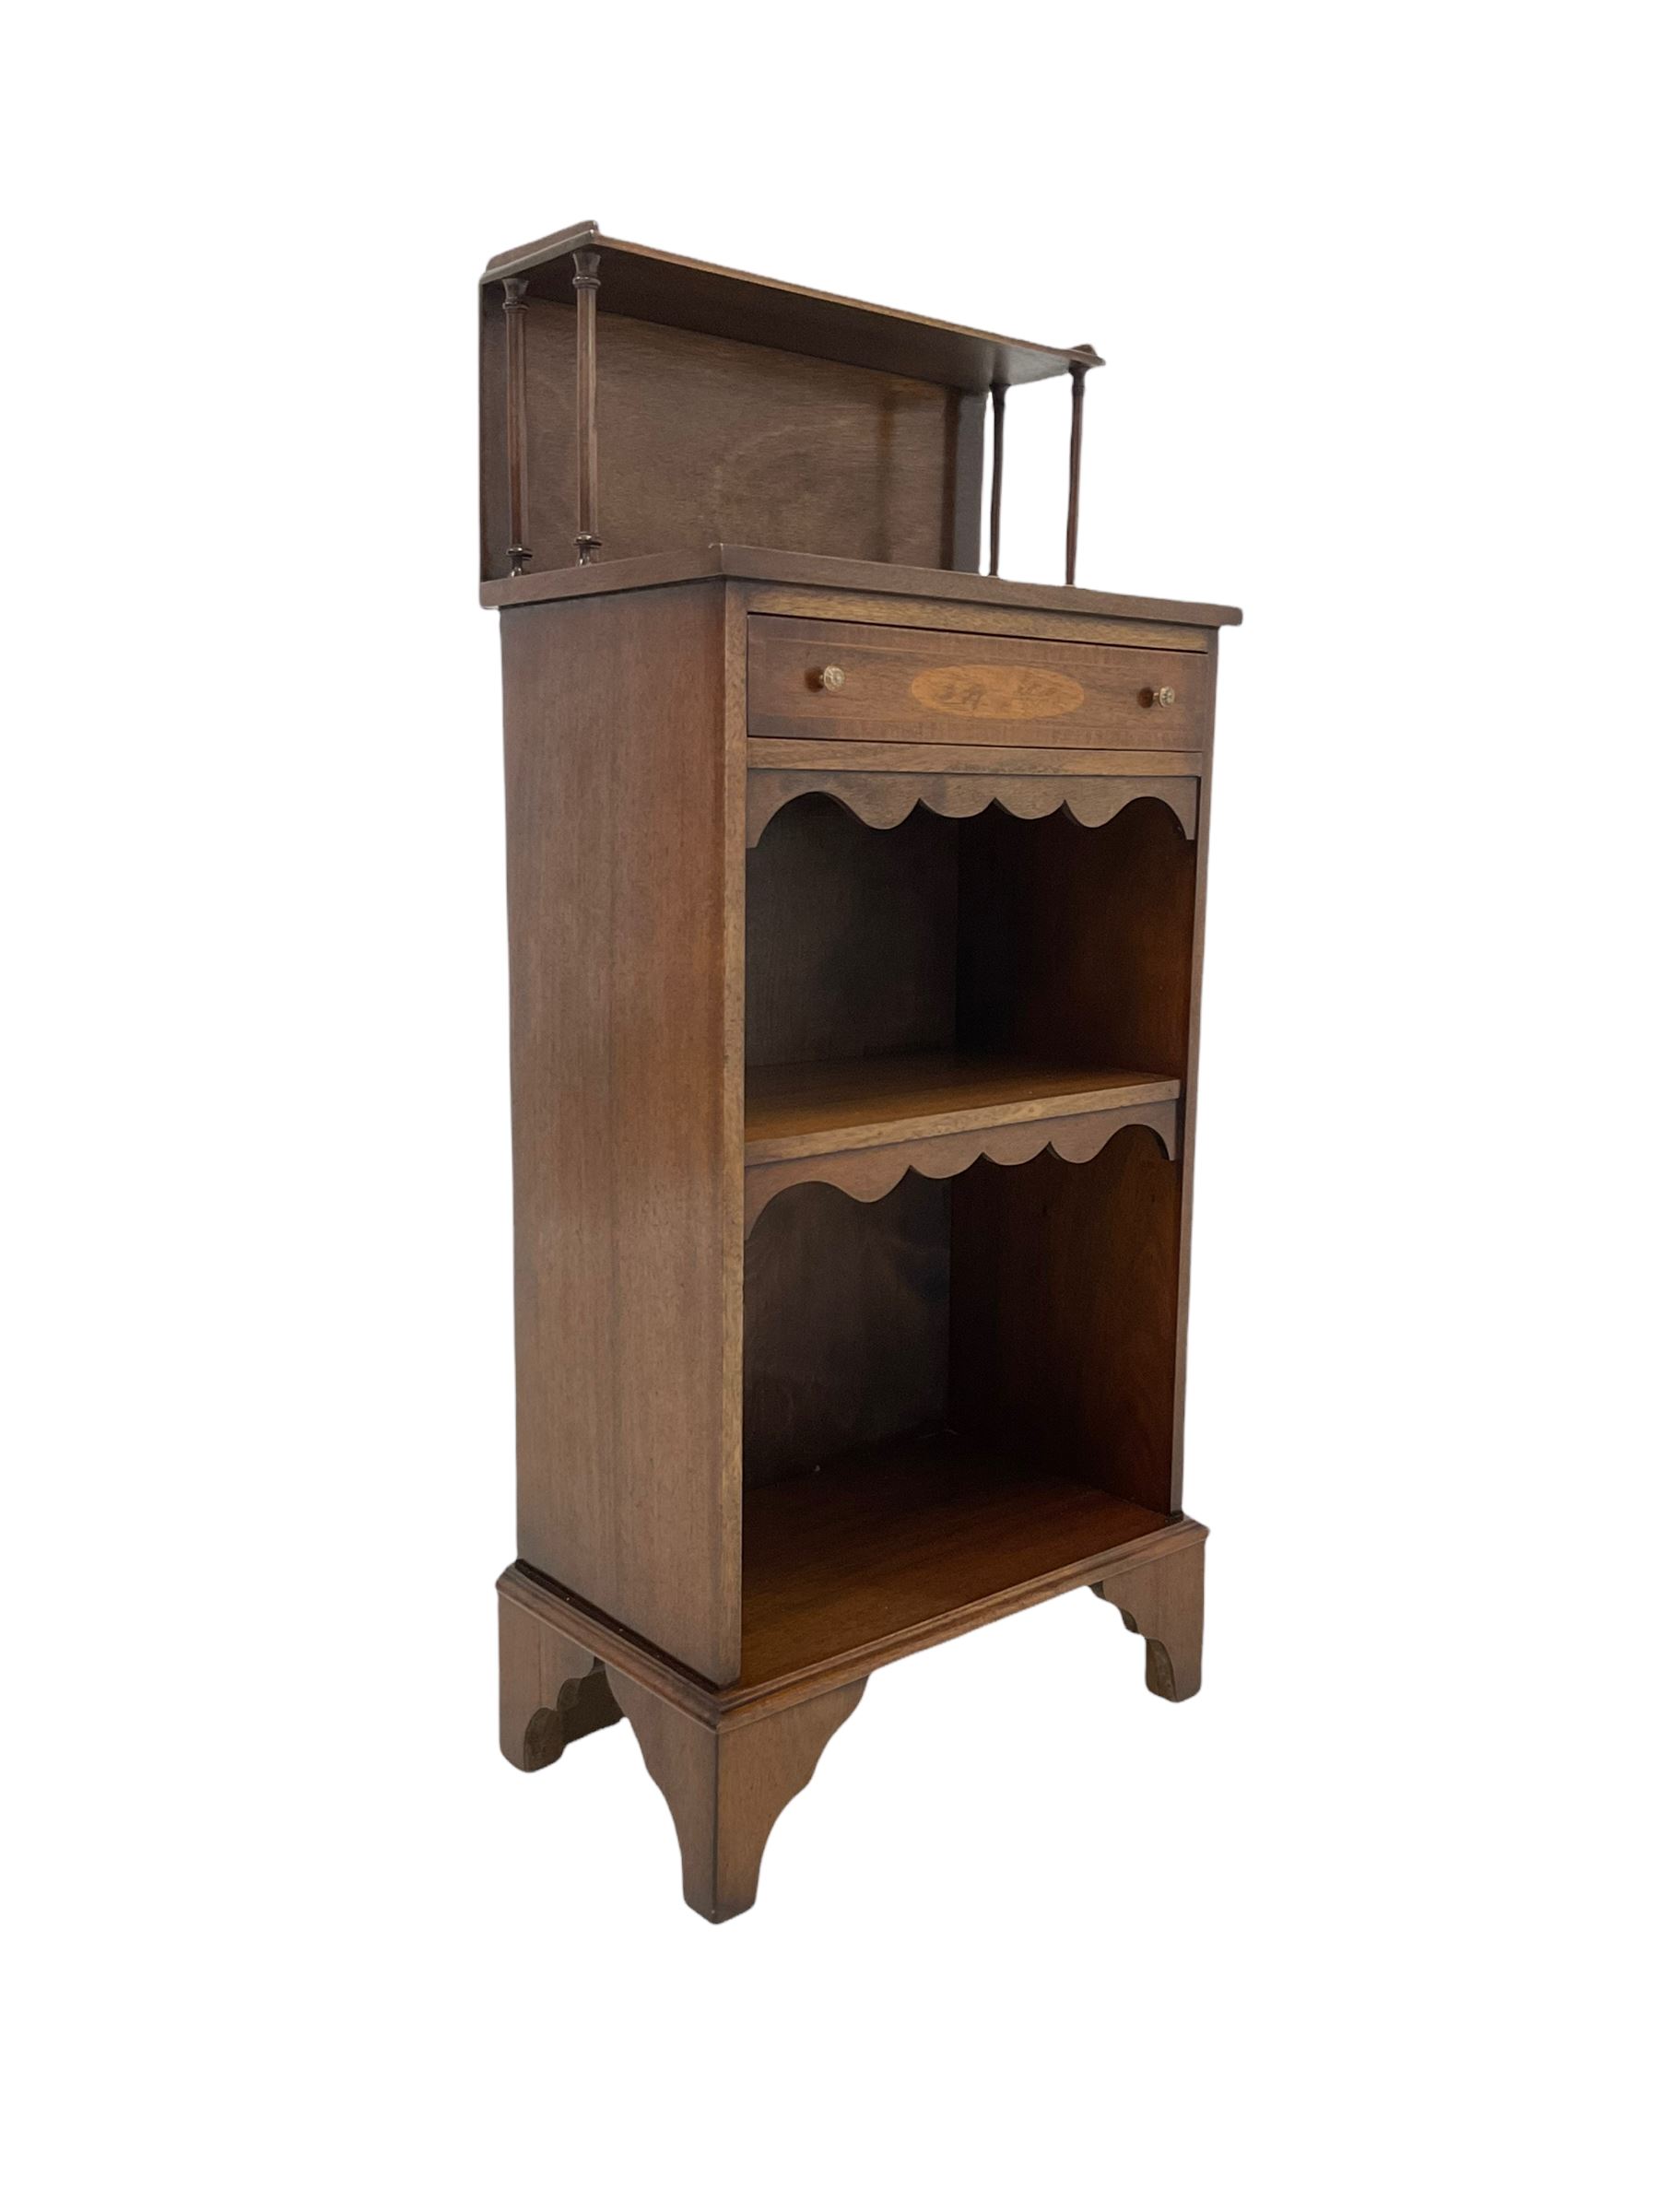 20th century mahogany open bookcase - Image 2 of 4